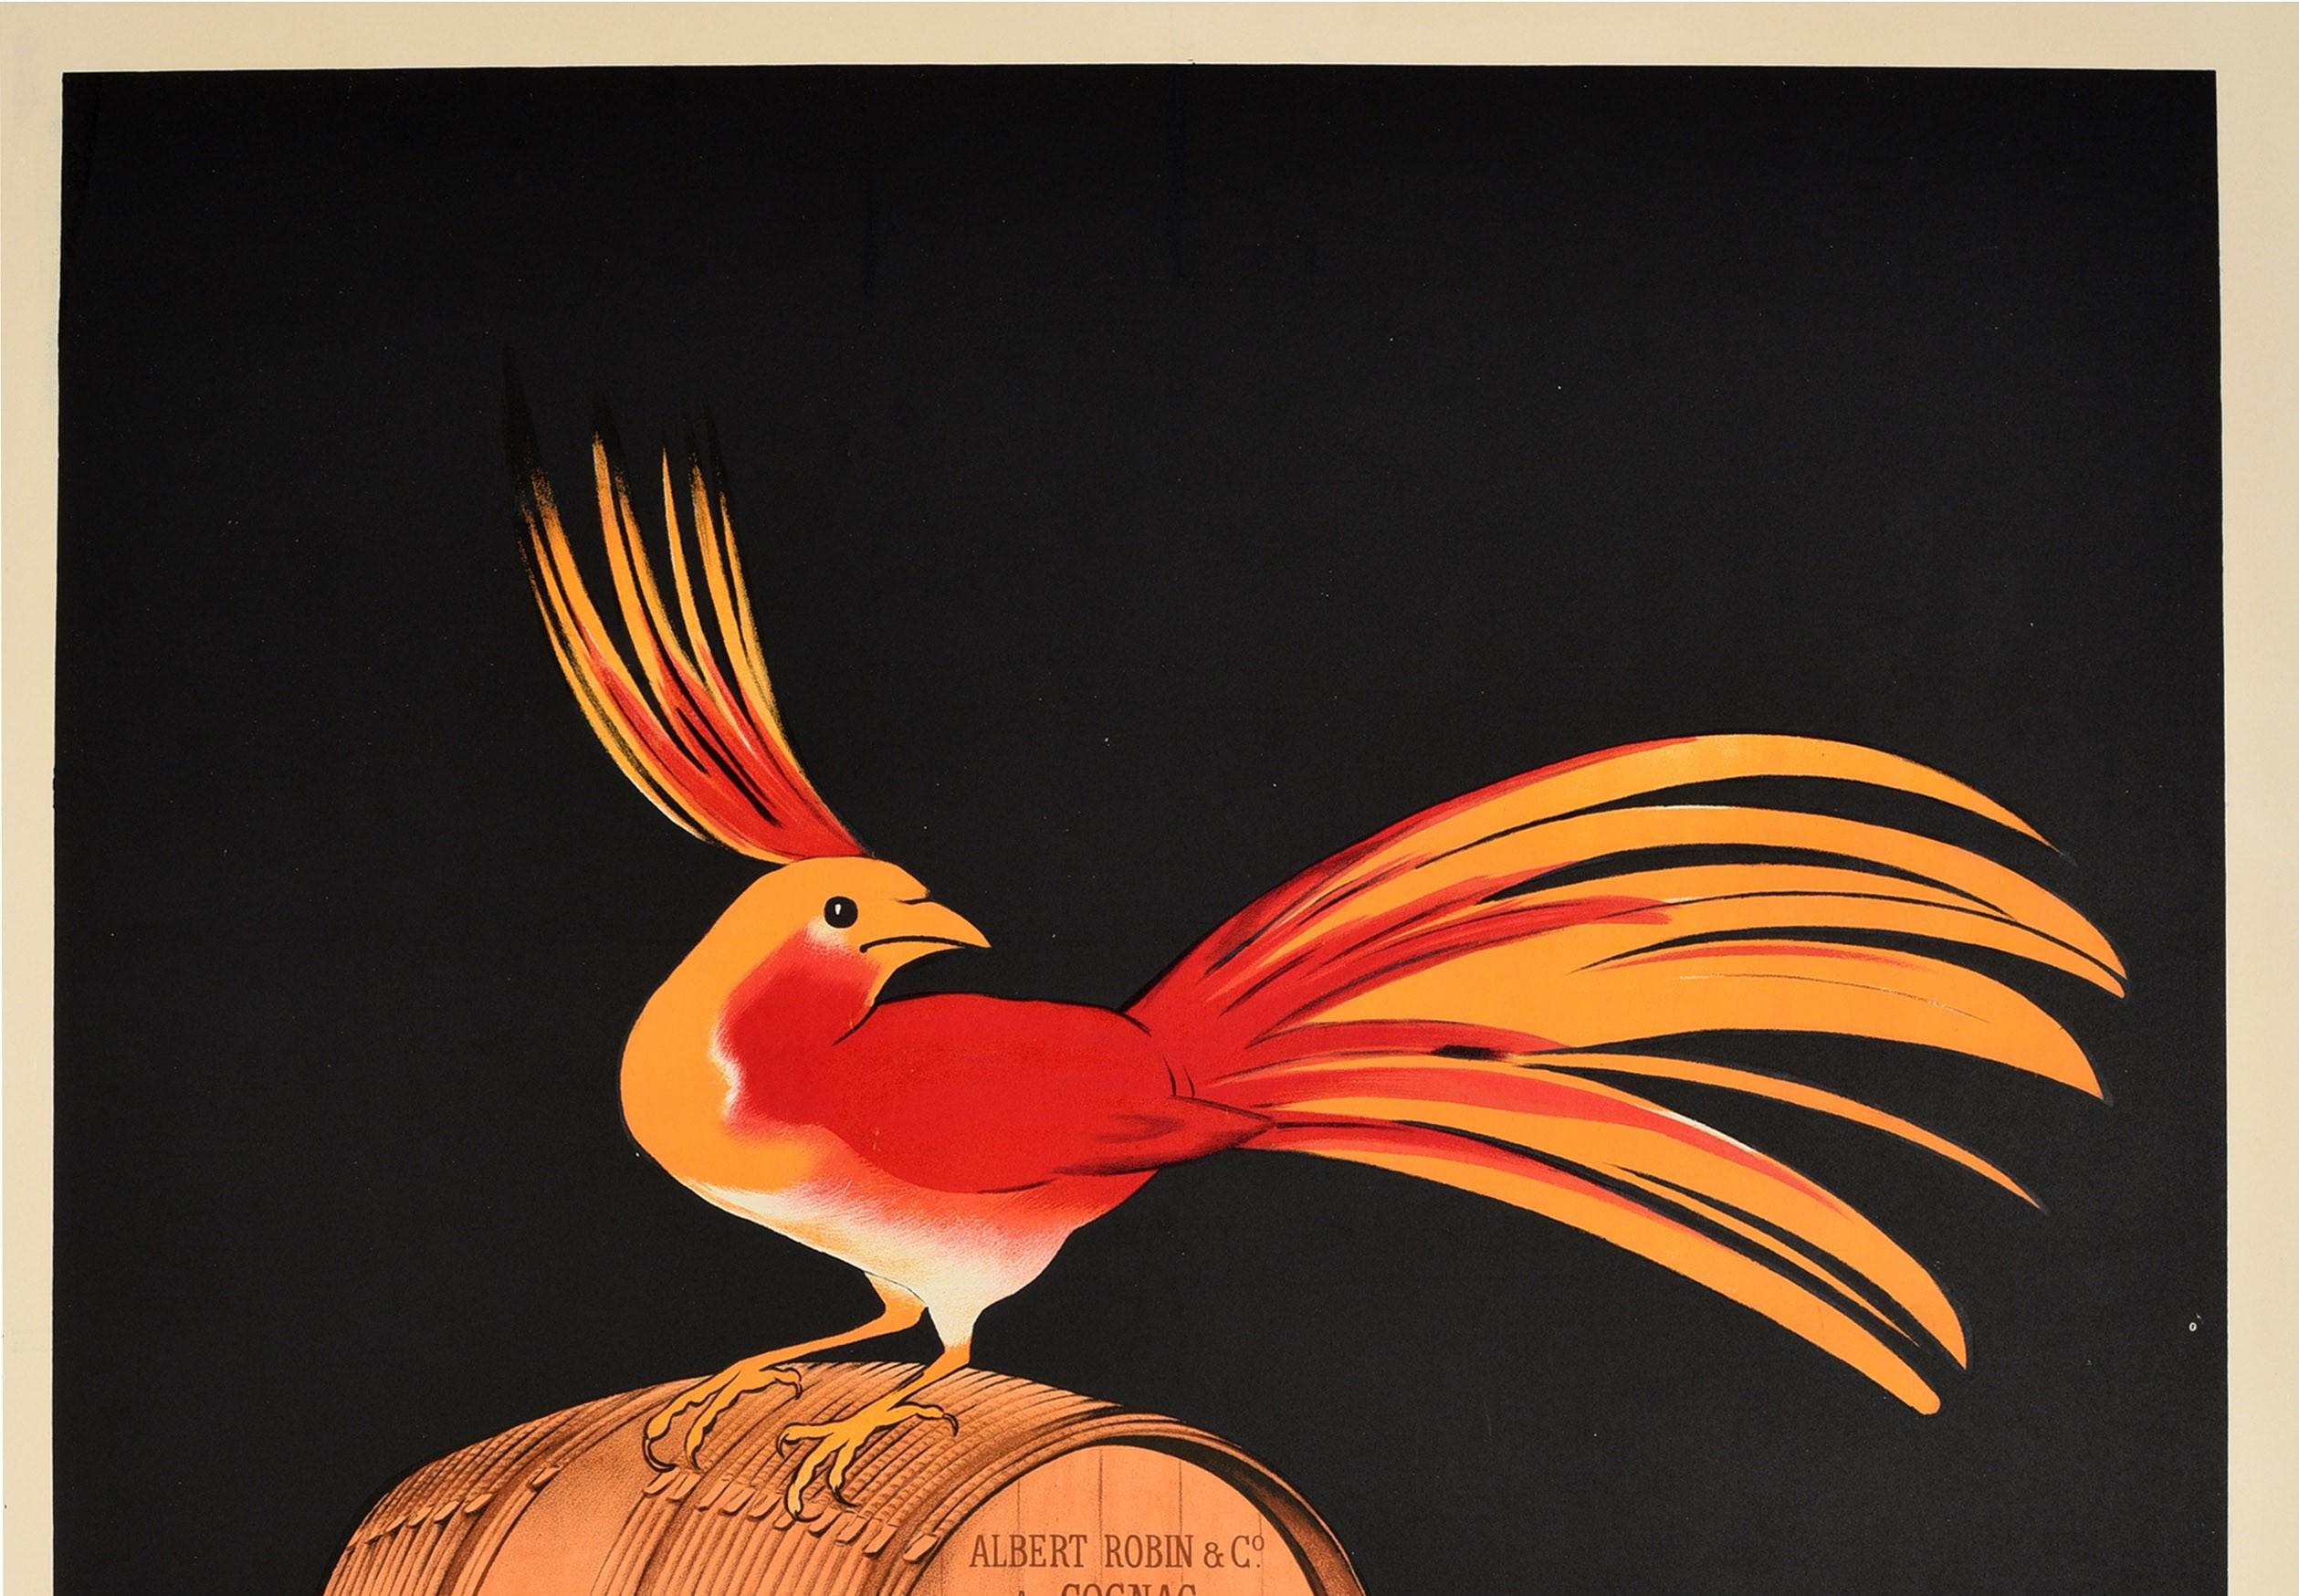 Original Antique Poster Cognac Albert Robin French Drink Advertising Art Bird - Print by Leonetto Cappiello